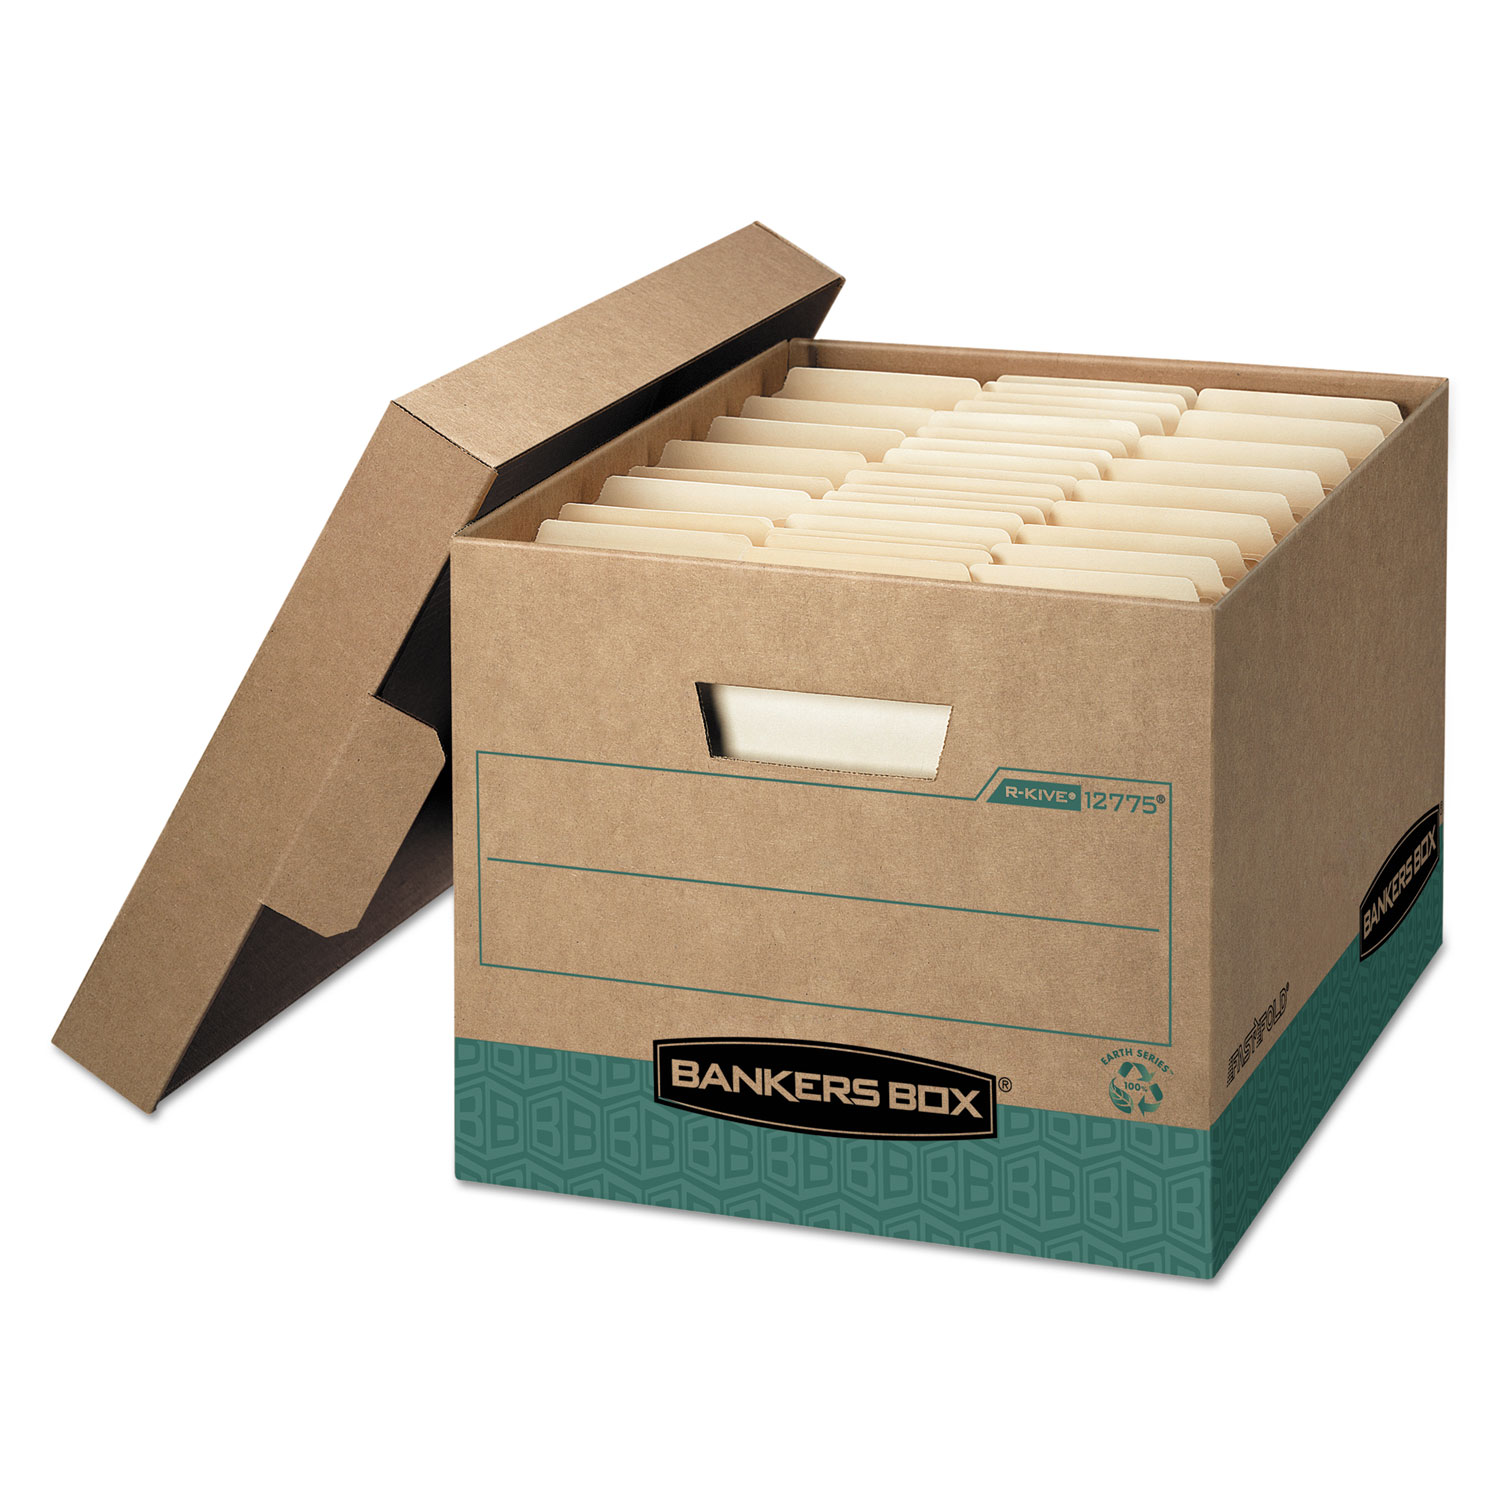 R-KIVE Heavy-Duty Storage Boxes by Bankers Box® FEL12775